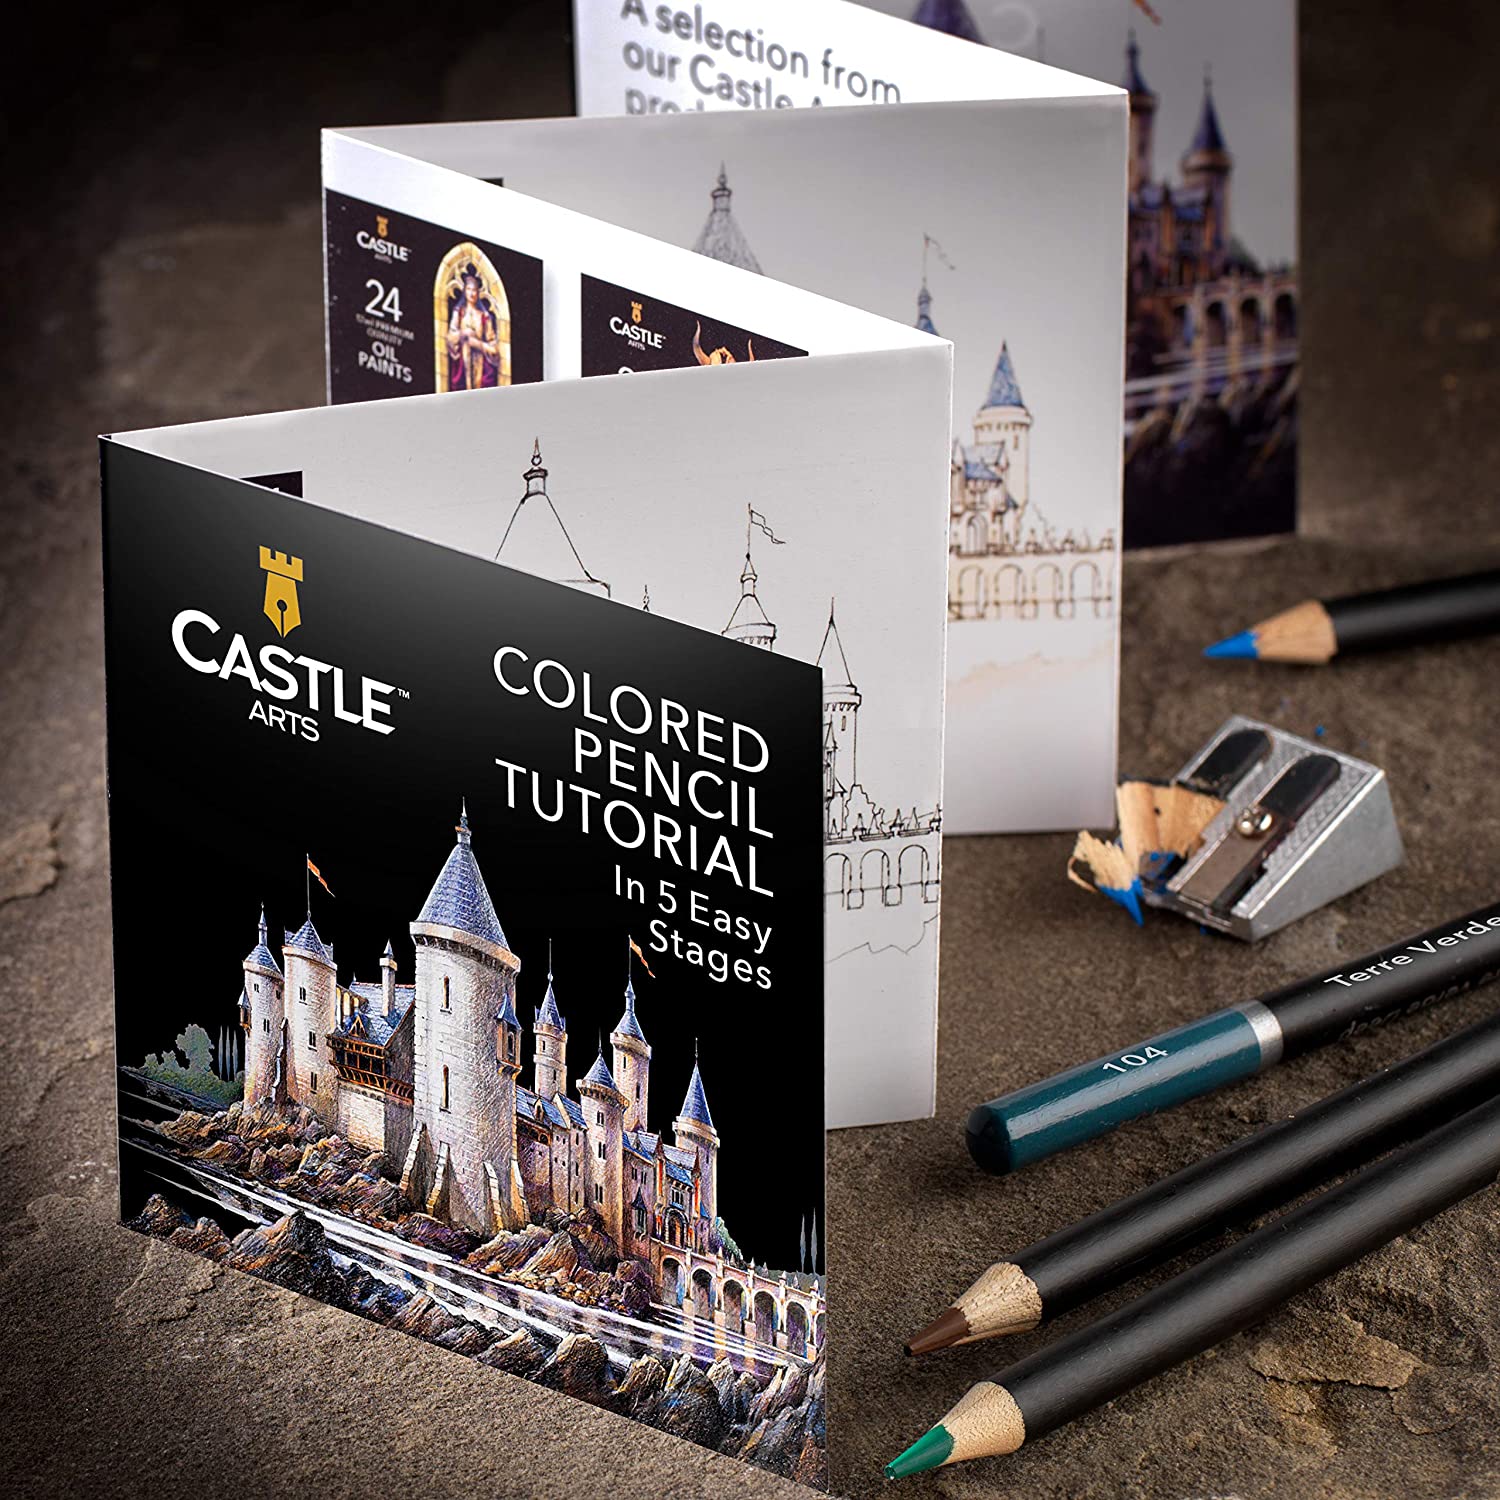 Castle Art 120 Colored Pencils Unboxig and color testing (no voice